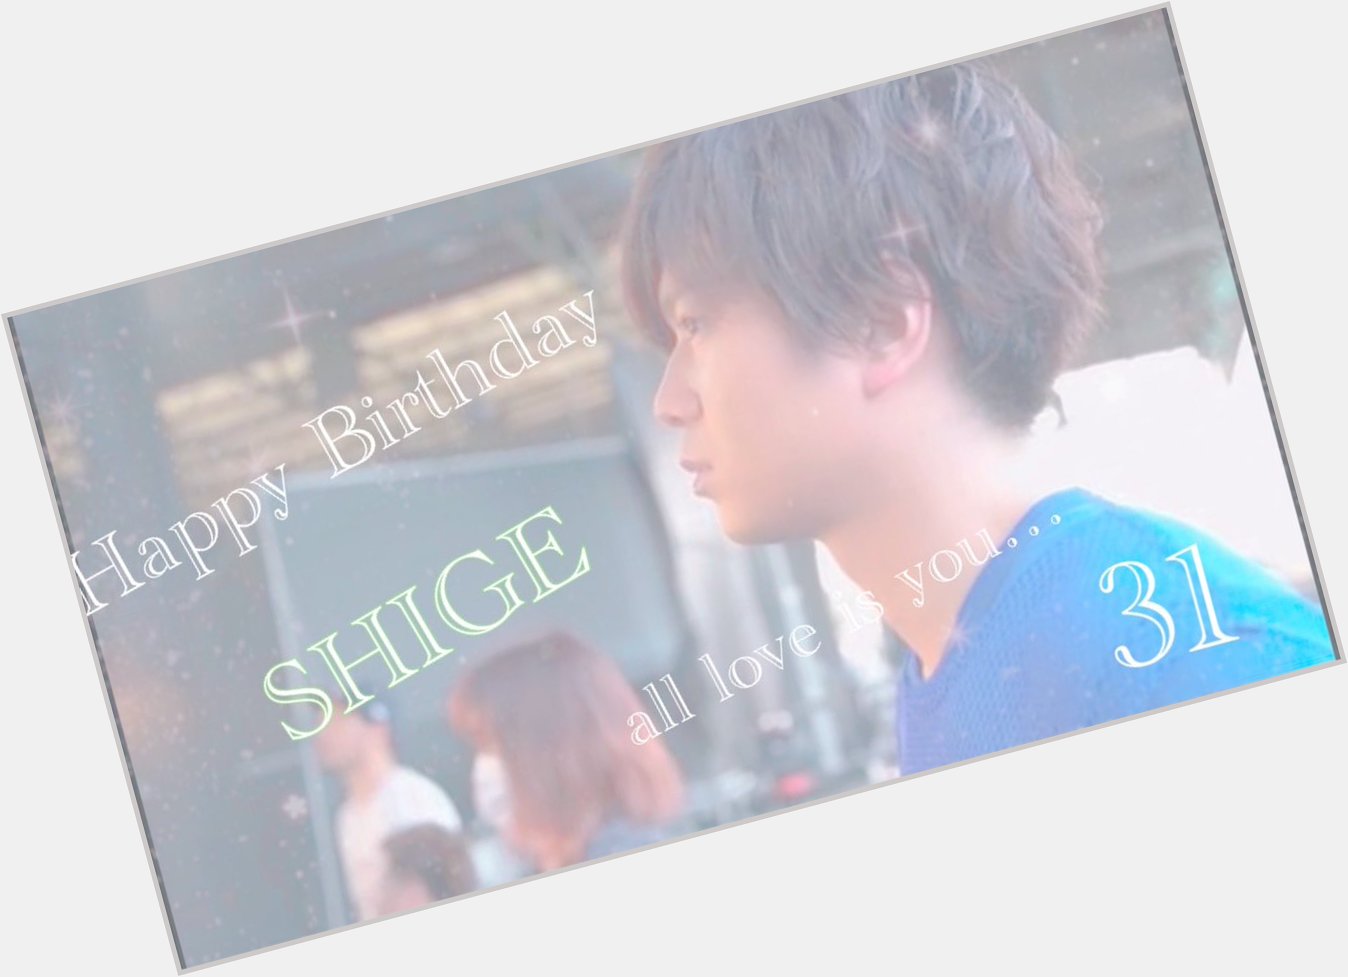   Happy Birthday   Shigeaki Kato  2018.07.11 31th 